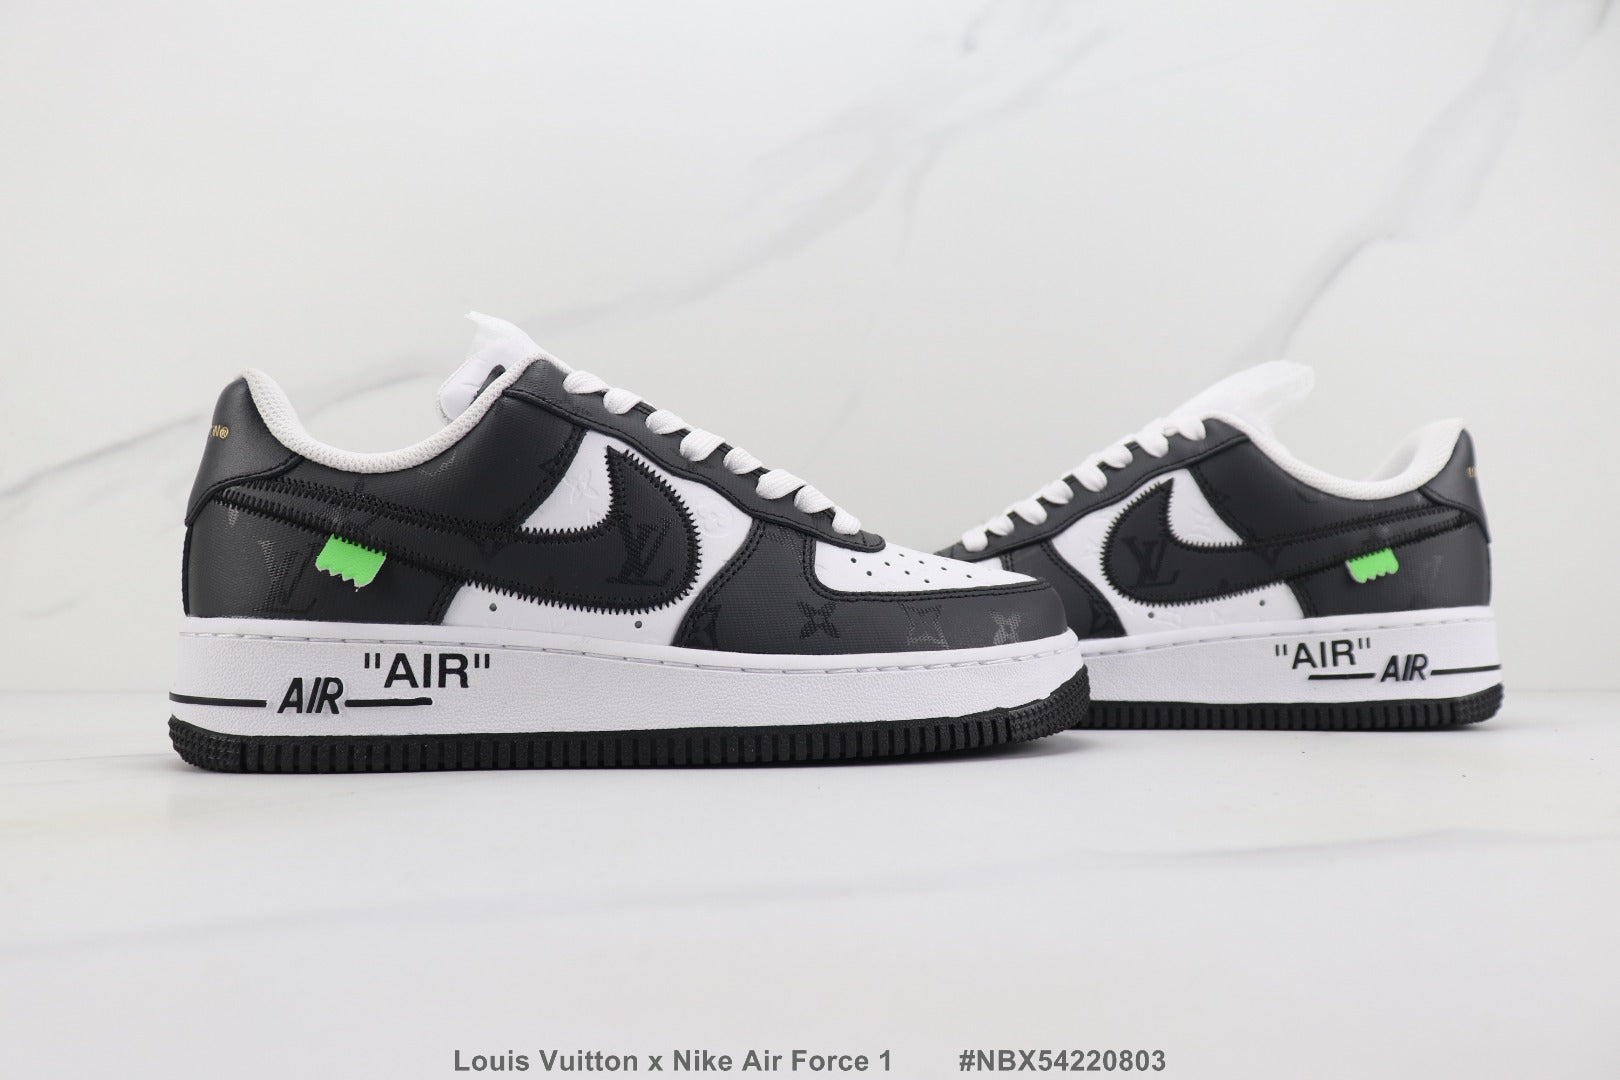 Louis Vuitton x Nike Air Force 1 low top board shoes